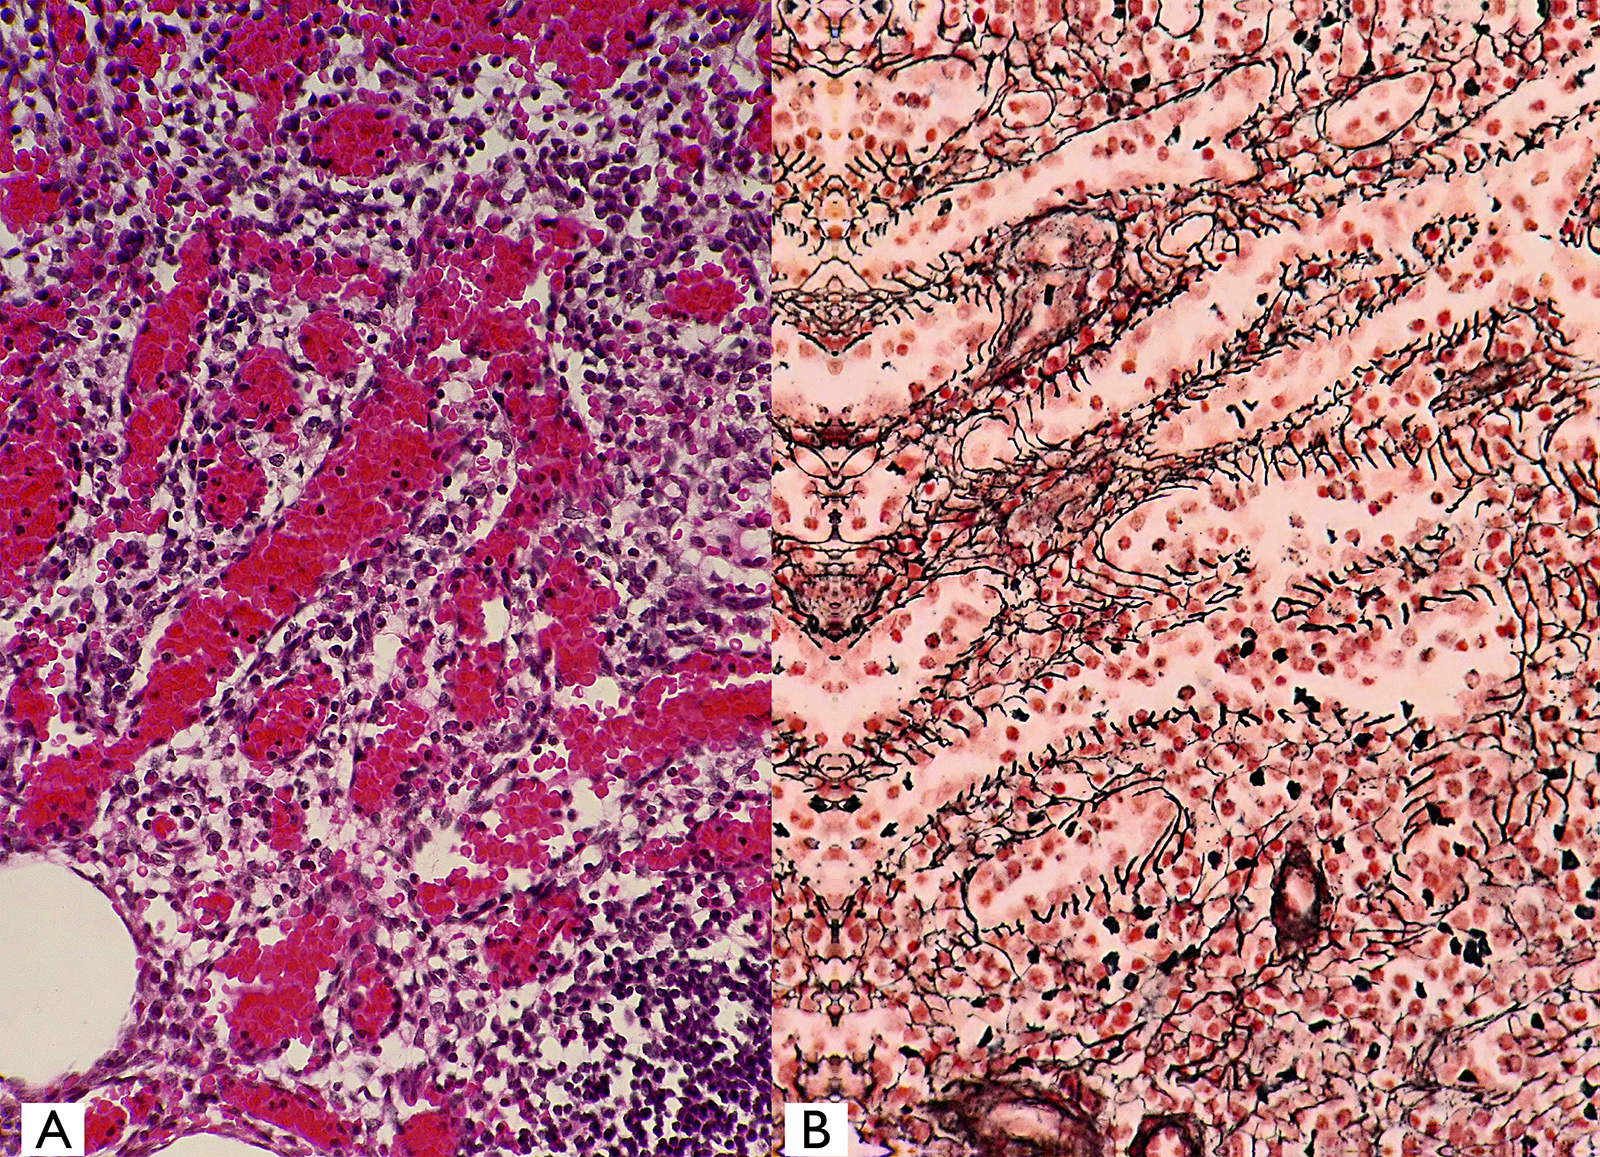 Mammalian Spleen - Histology sections compared